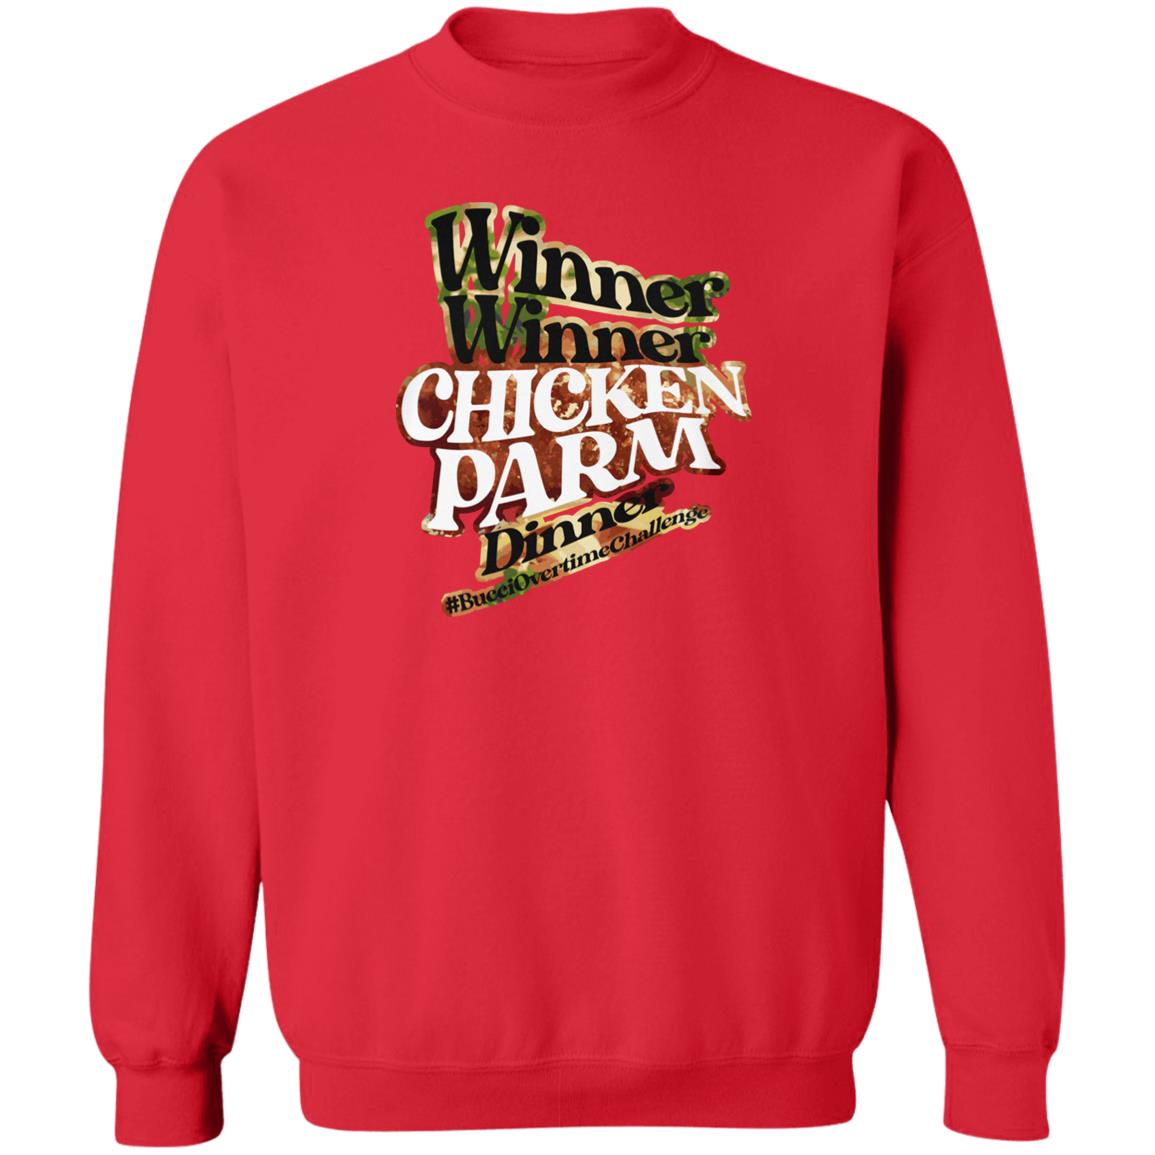 Winner Winner Chicken Parm Dinner Shirt 2